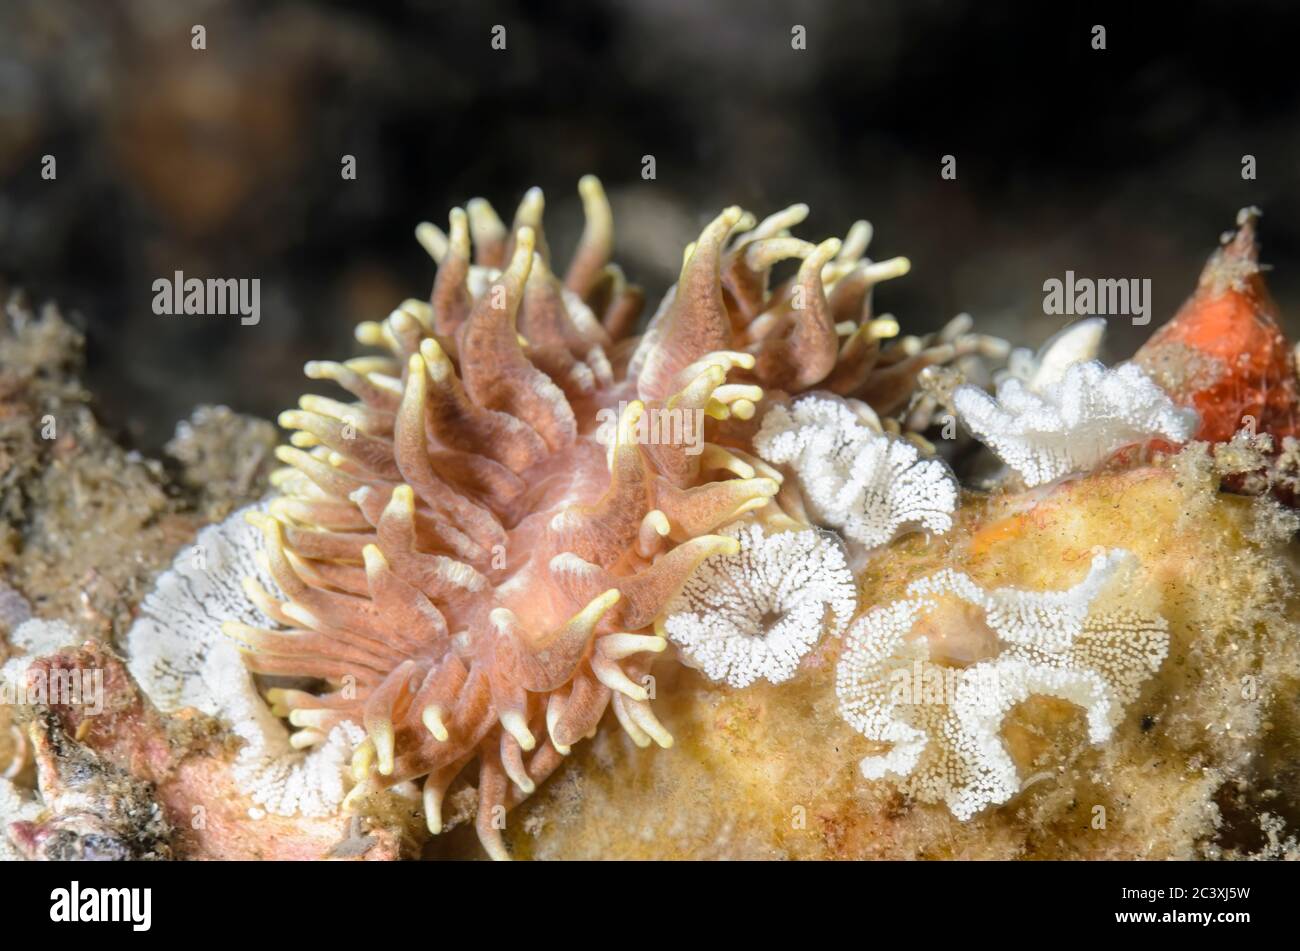 sea slug or nudibranch, Phestilla sp., Lembeh Strait, North Sulawesi, Indonesia, Pacific Stock Photo